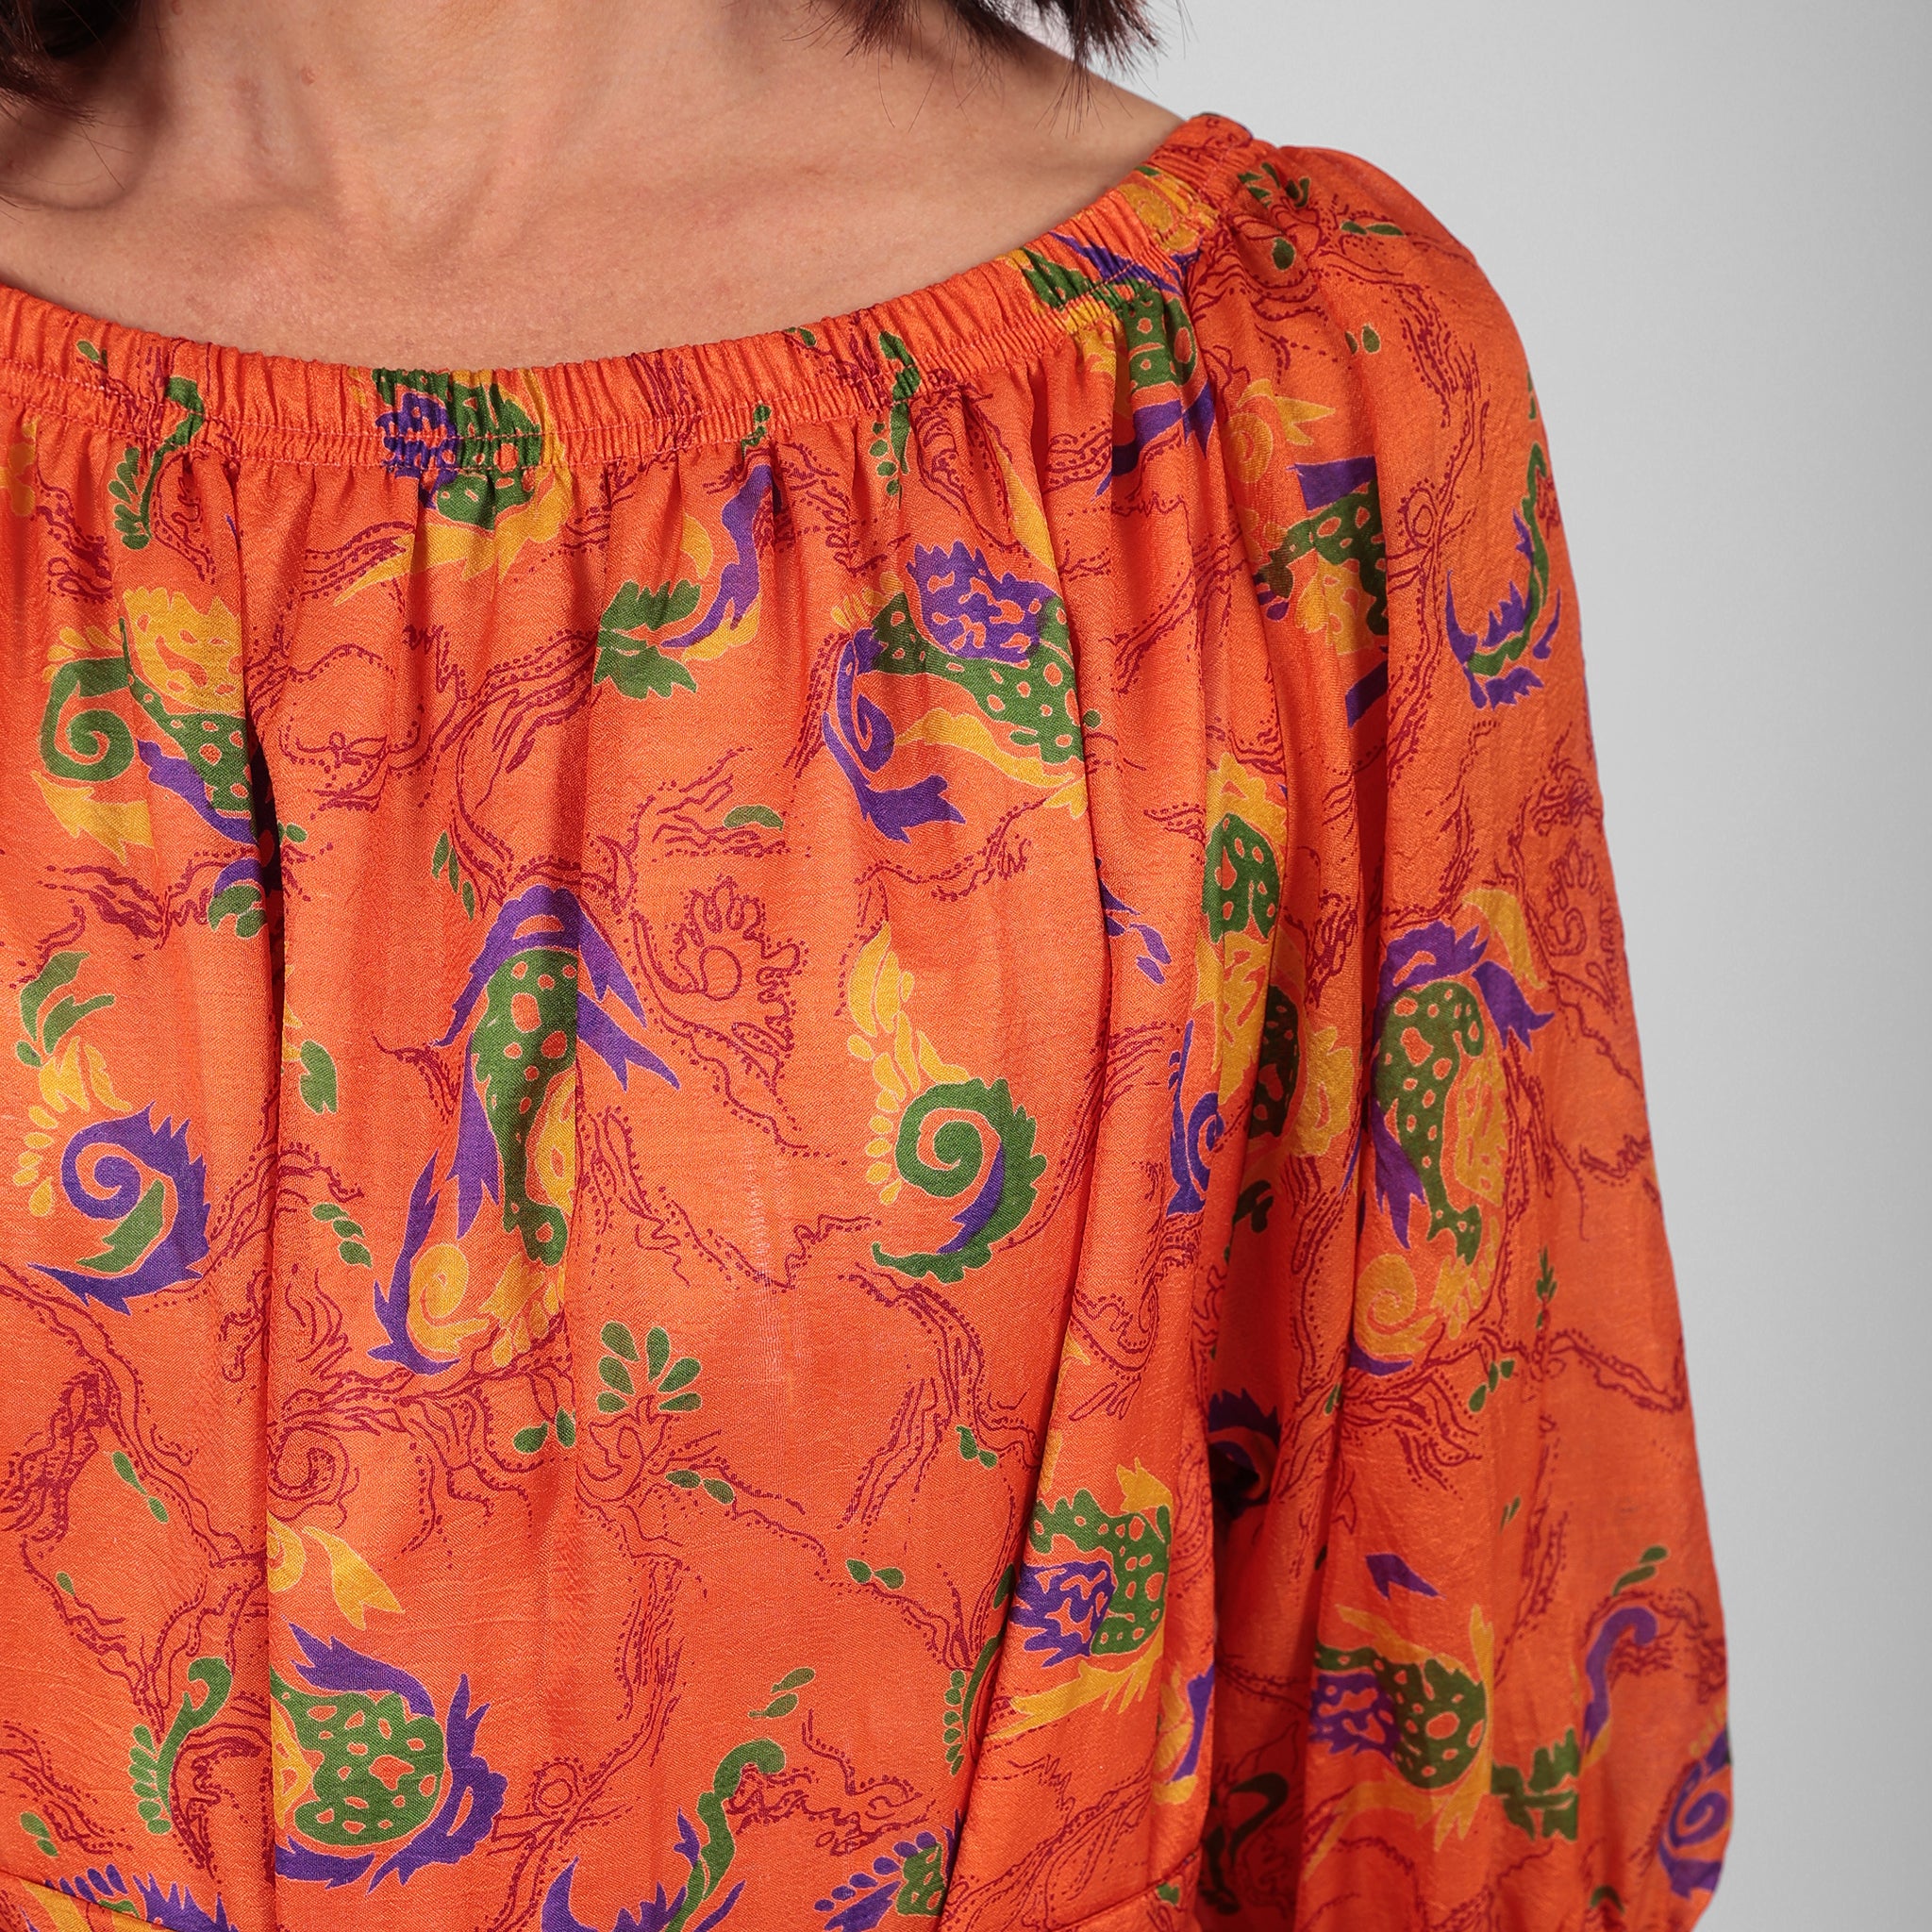 Ausus - Vintage Silk Sari Spritz Orange Abstract Floral Print Maxi Dress close up of print